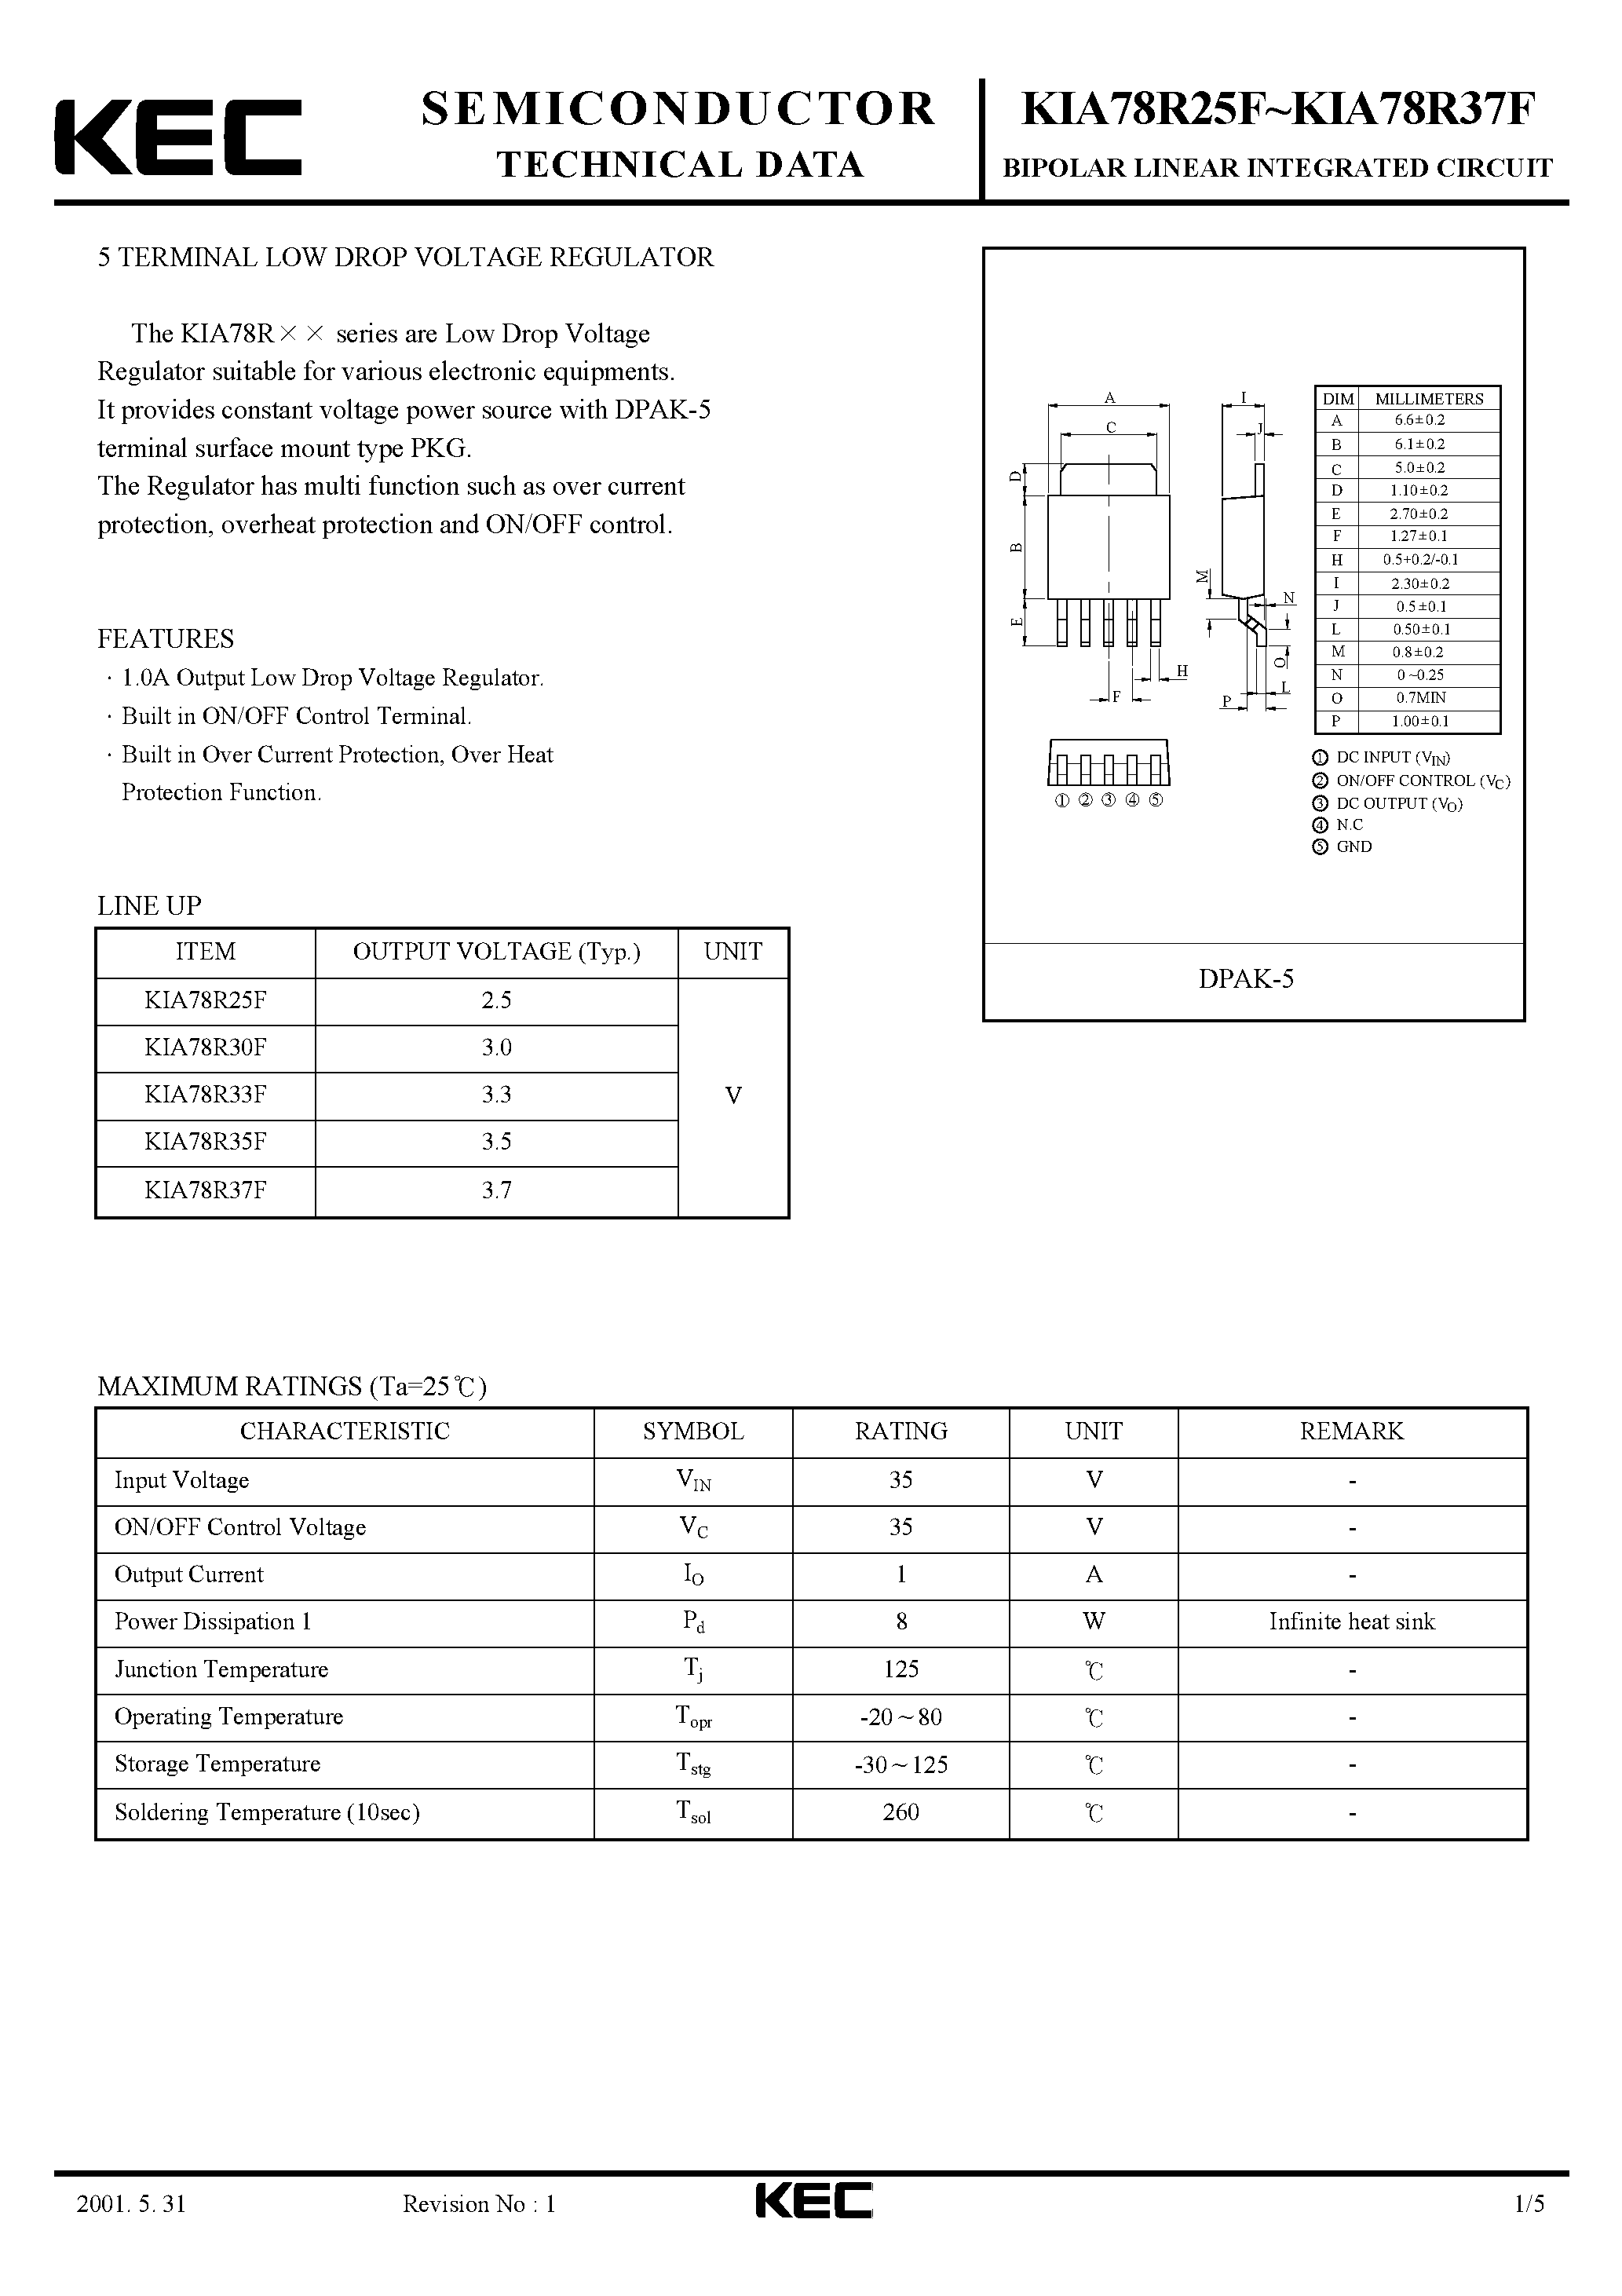 Datasheet KIA78R37F - BIPOLAR LINEAR INTEGRATED CIRCUIT (5 TERMINAL LOW DROP VOLTAGE REGULATOR) page 1